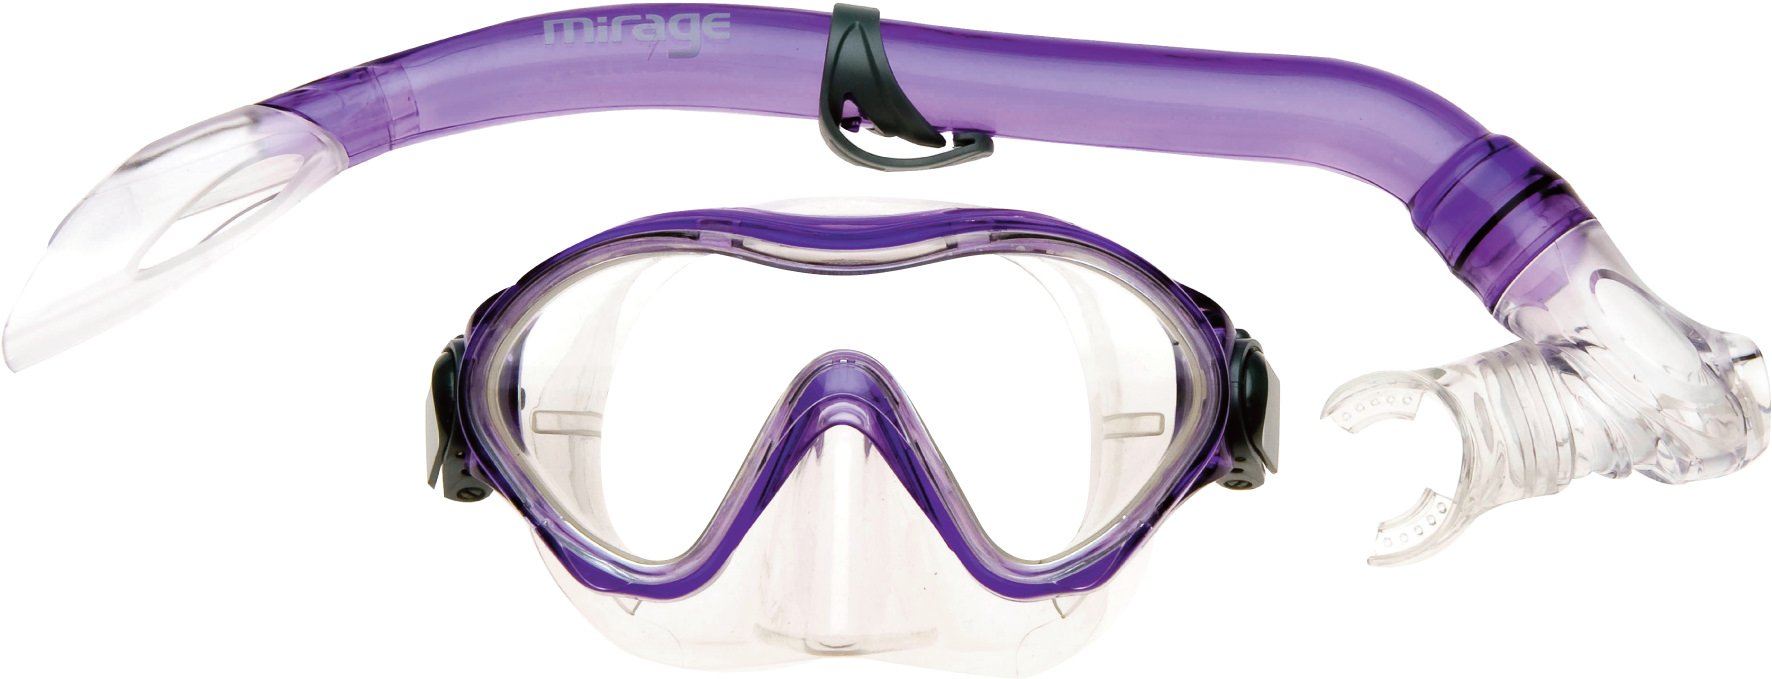 Mirage Goby Junior Mask & Snorkel Sets